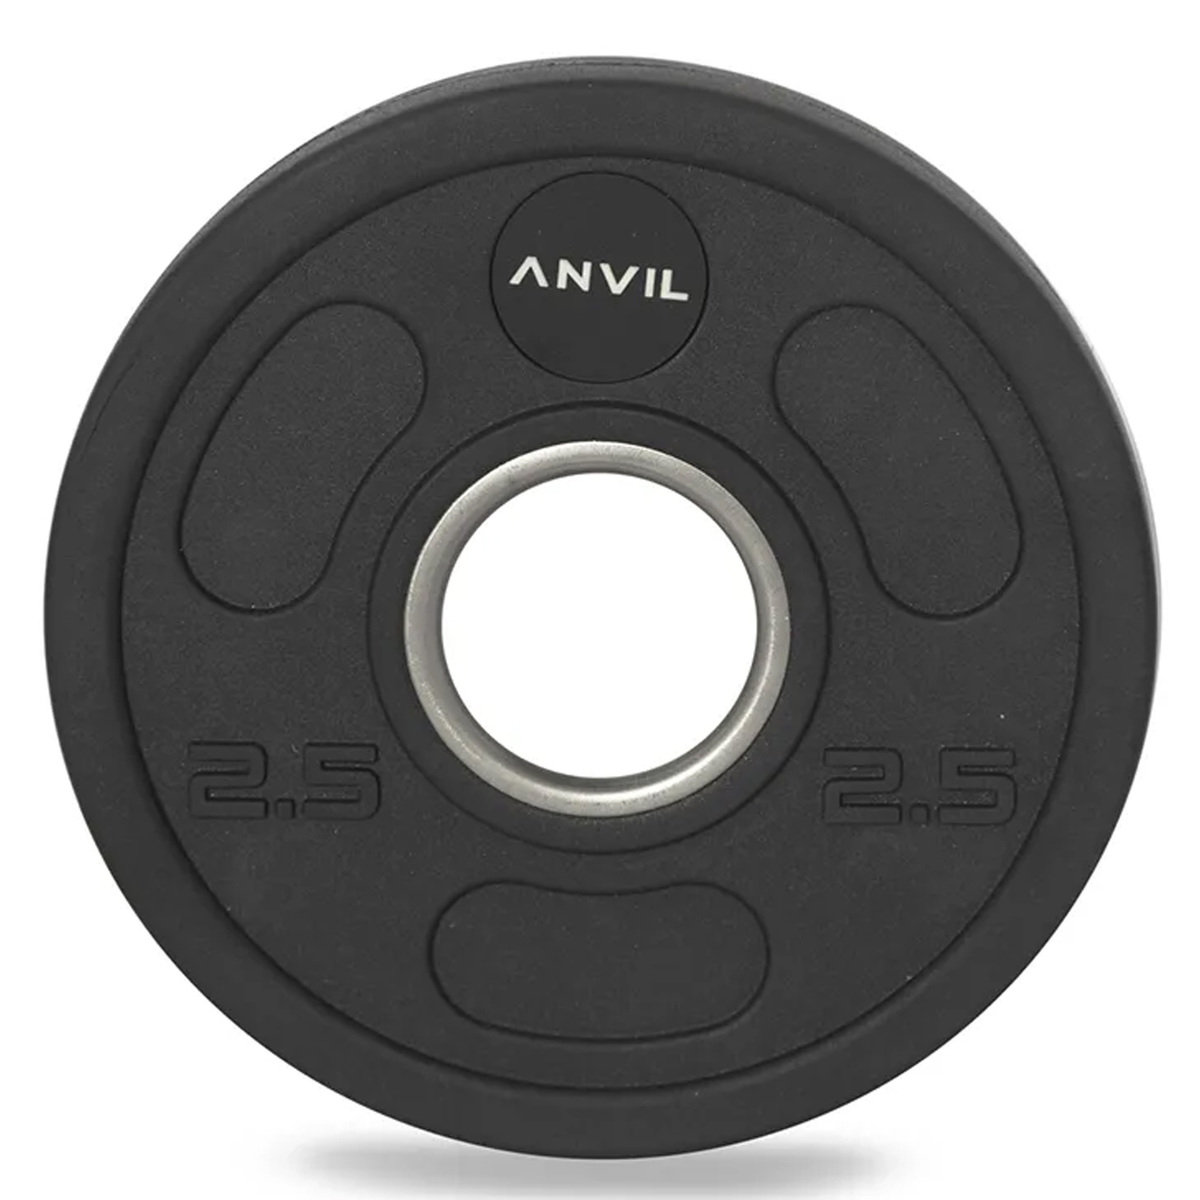 Anvil Olympic Rubber Plate, 5 kg, Black, ANV-RUB-BLA-5KG